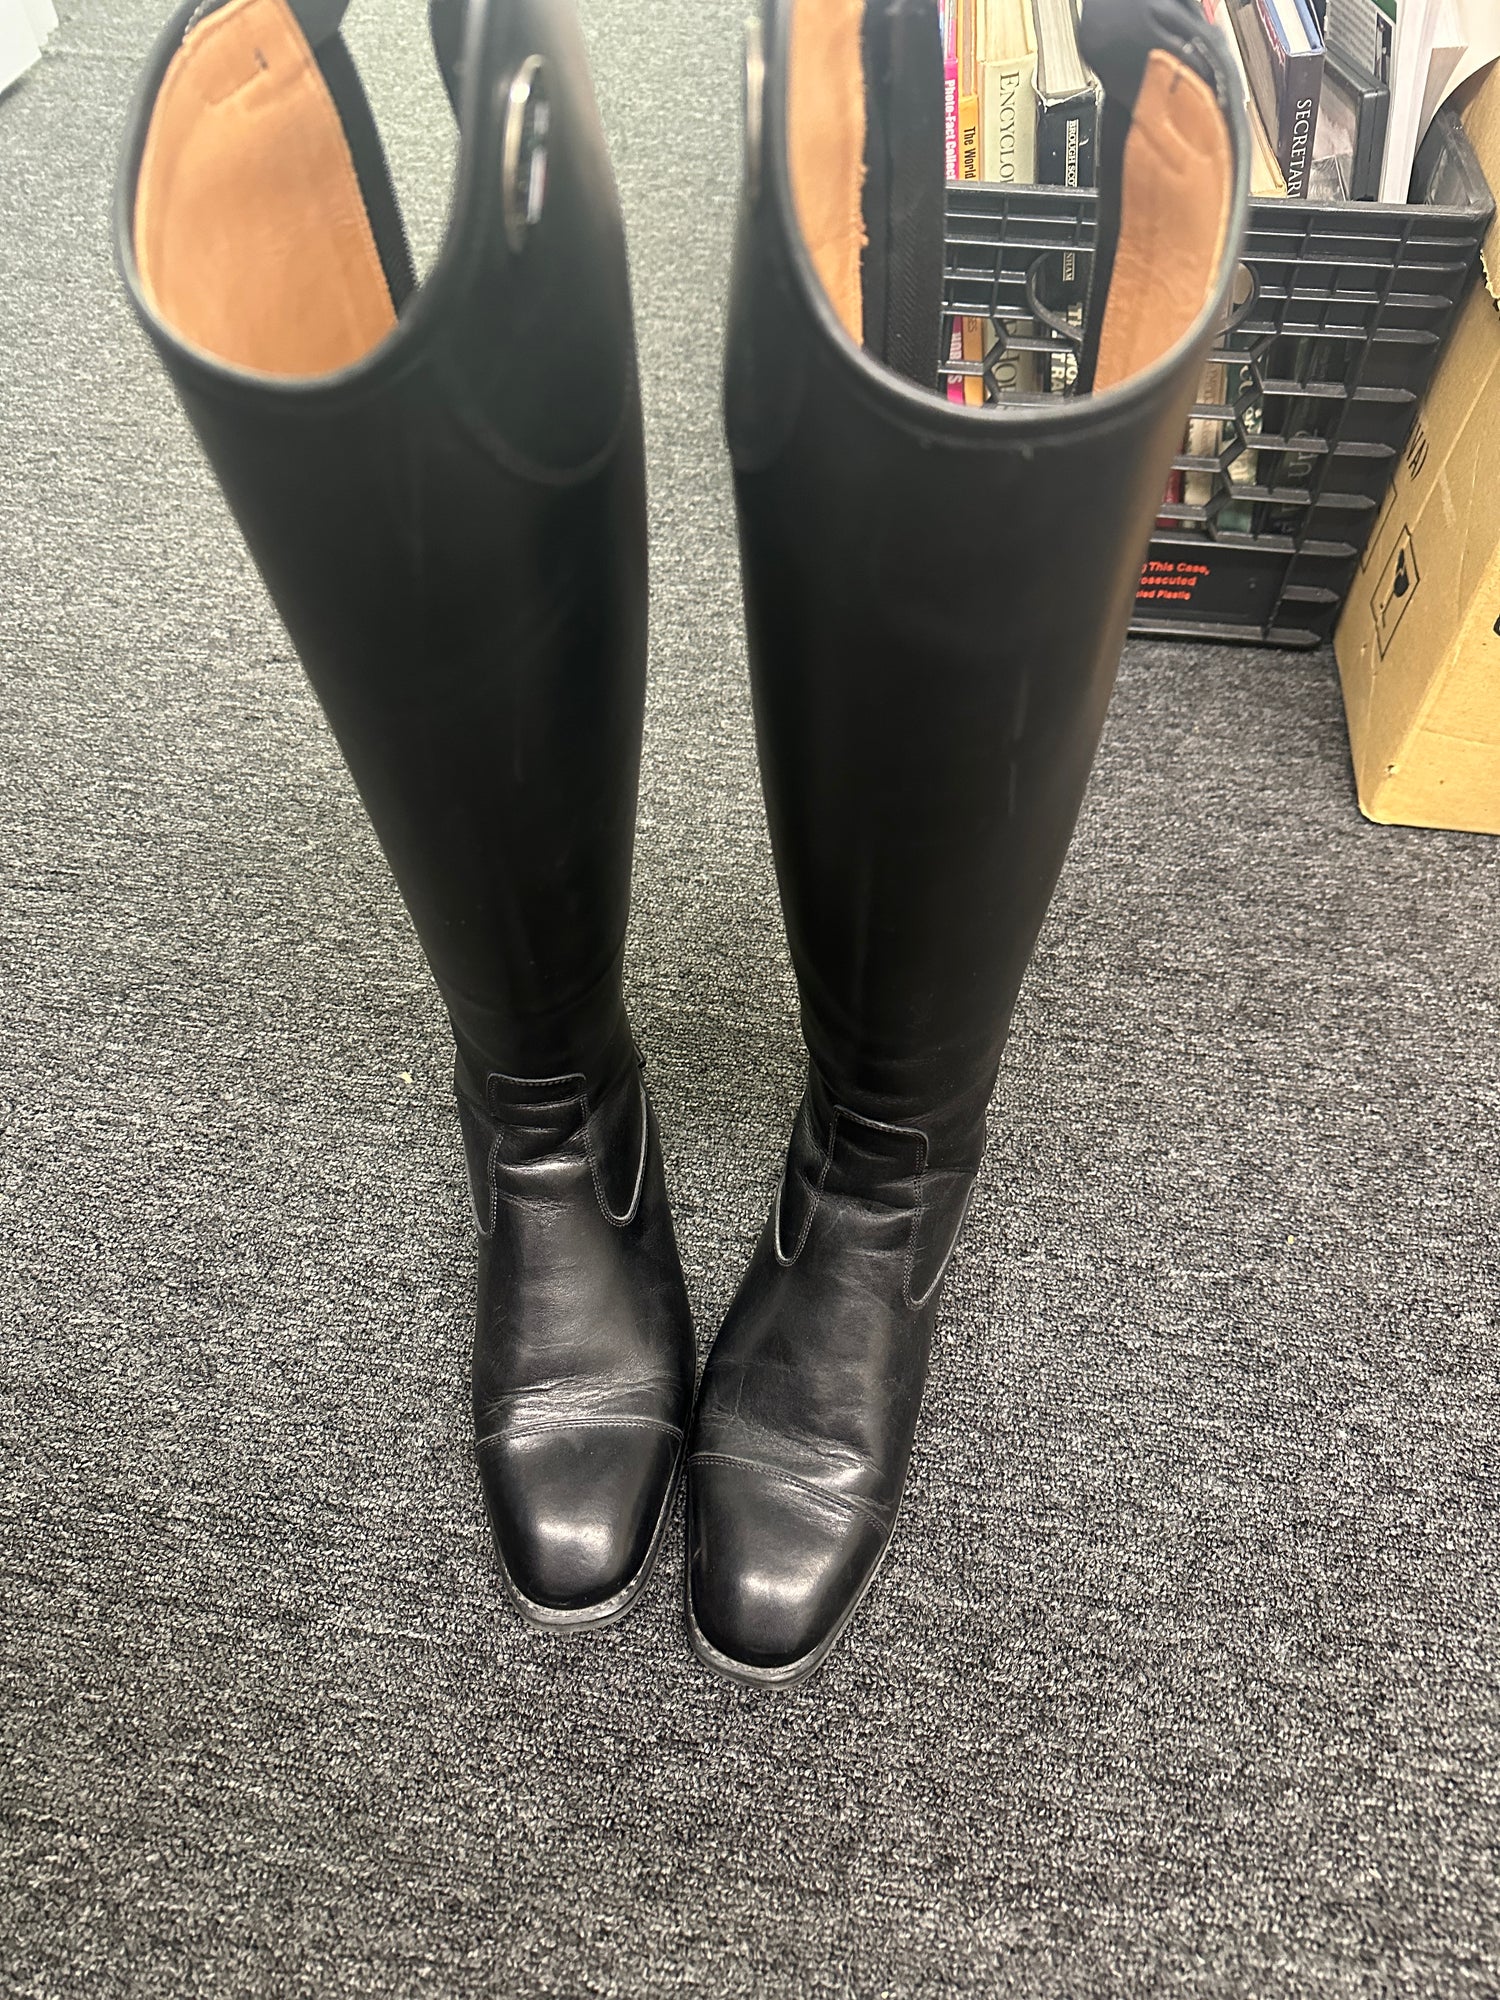 8 Women's Dressage Boots - Black Tall Boots Size 8